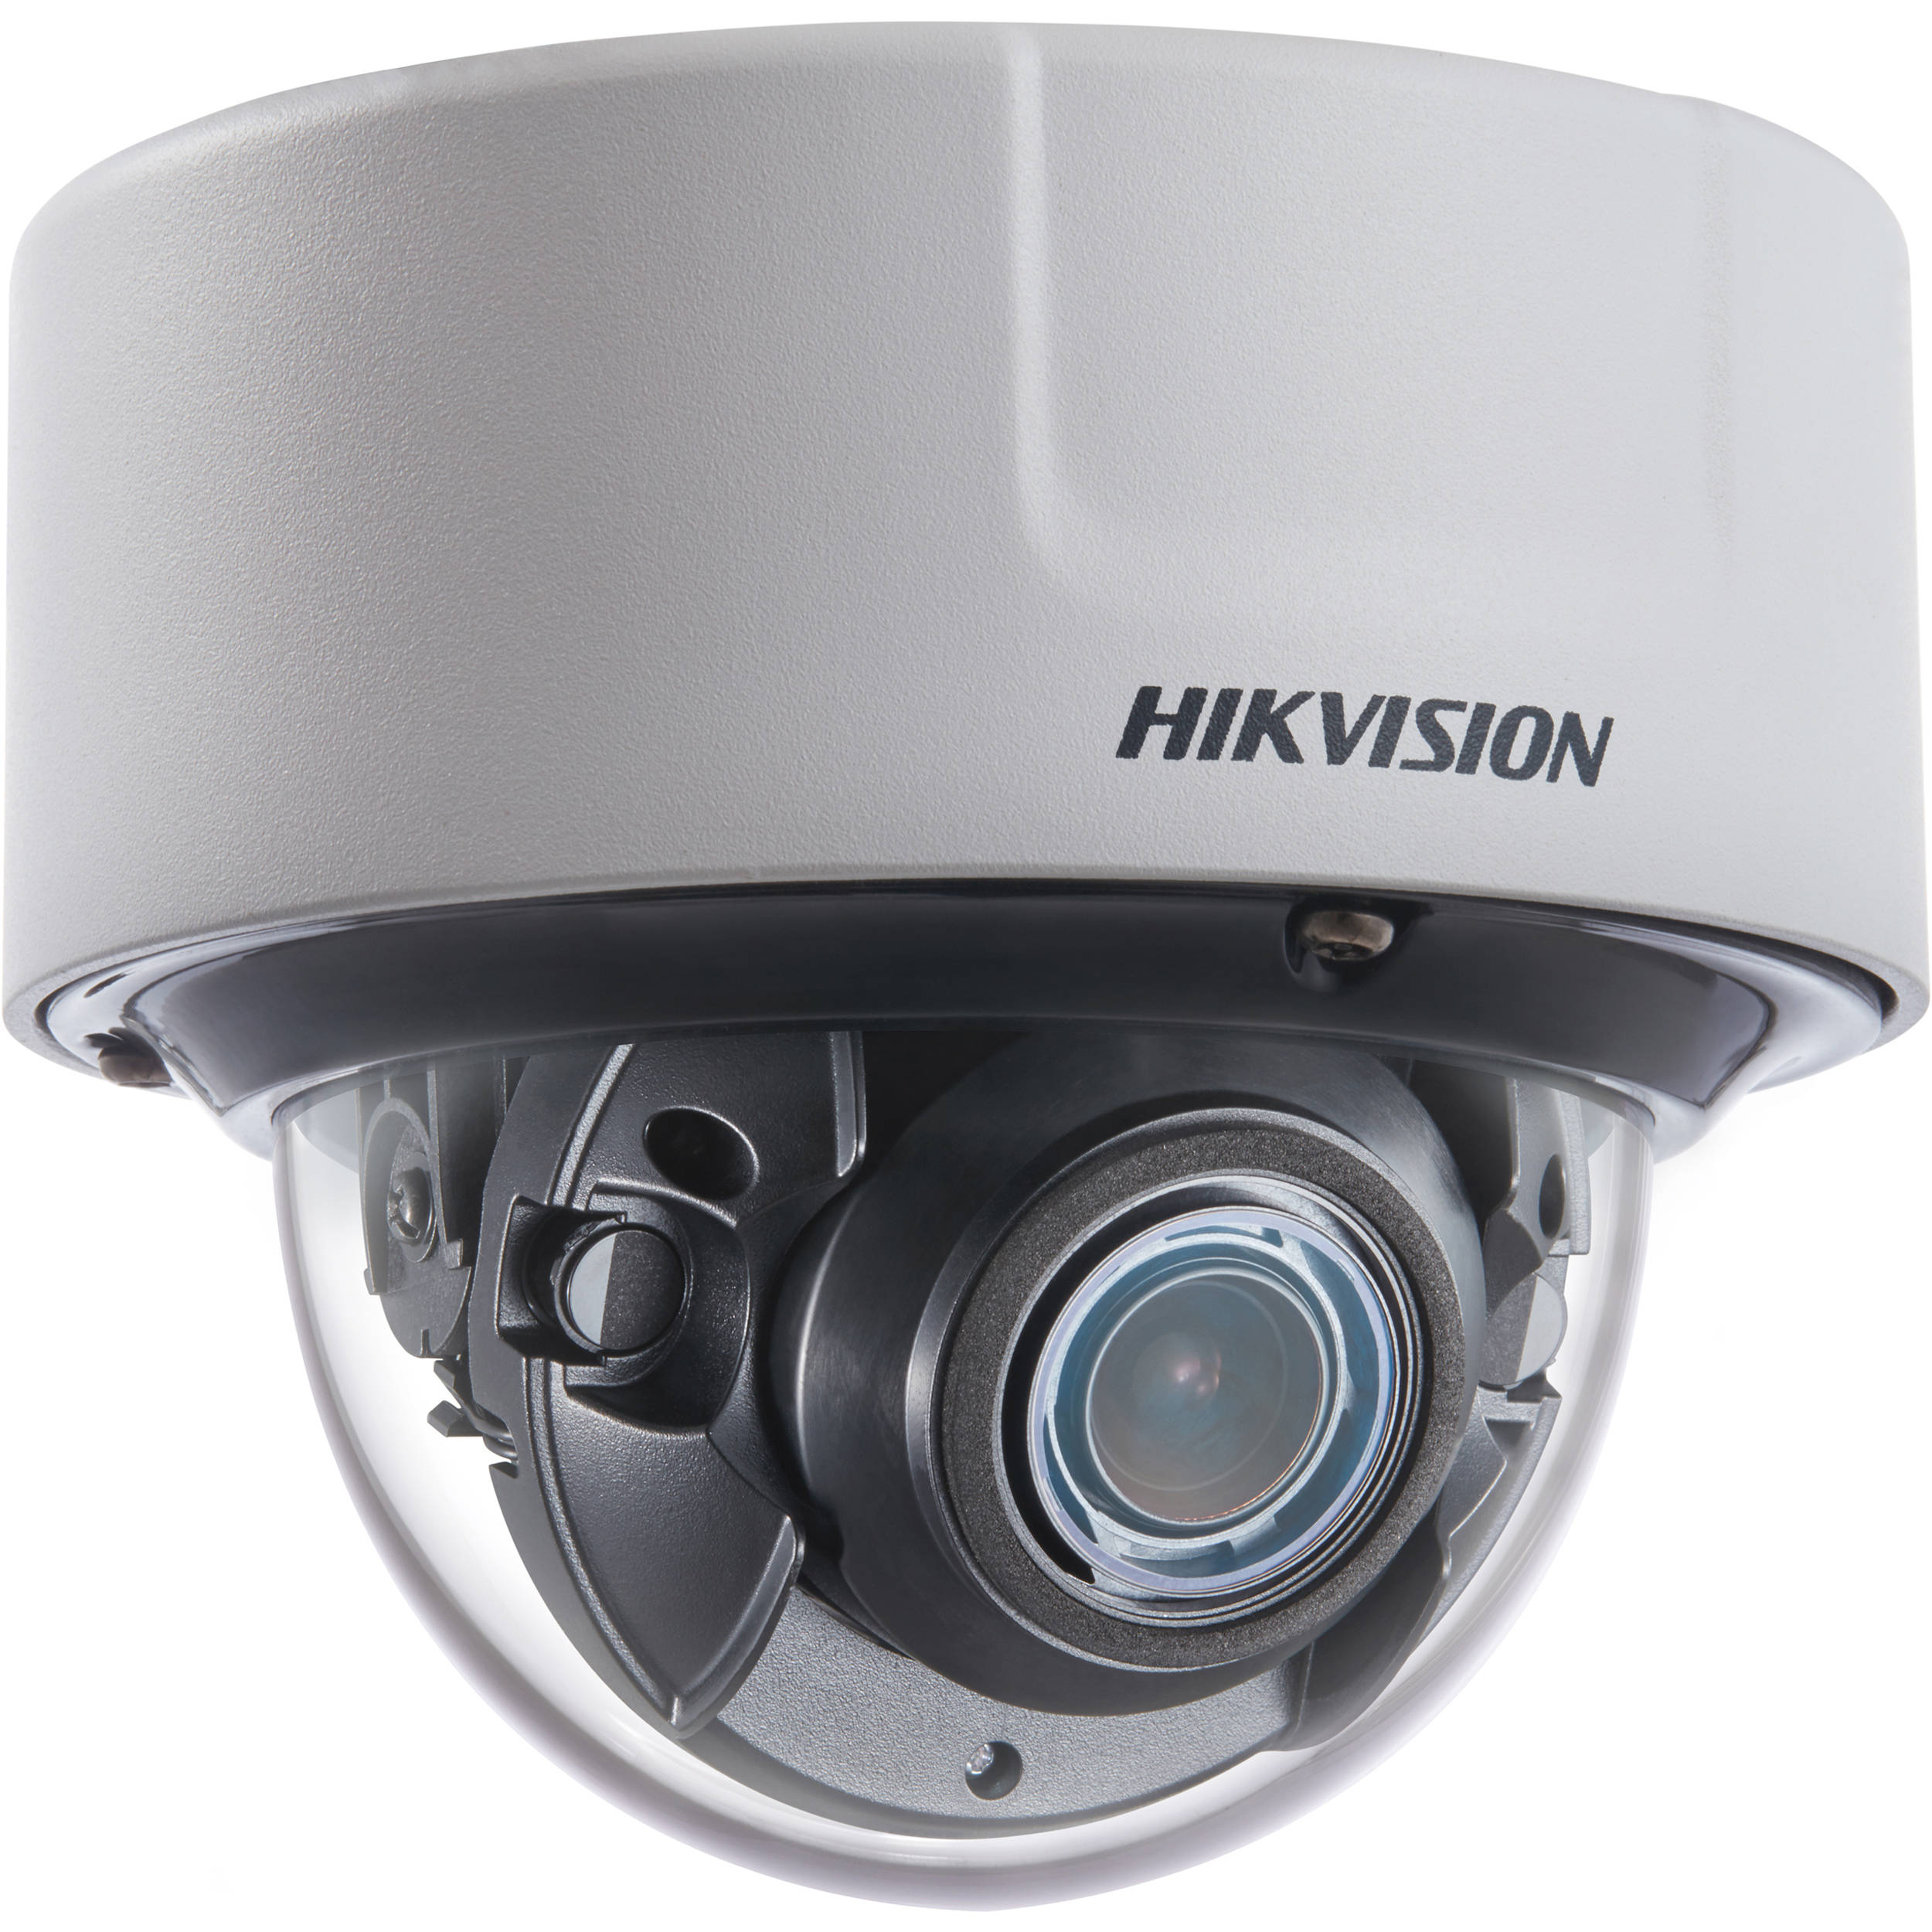 2mp hikvision dome camera price